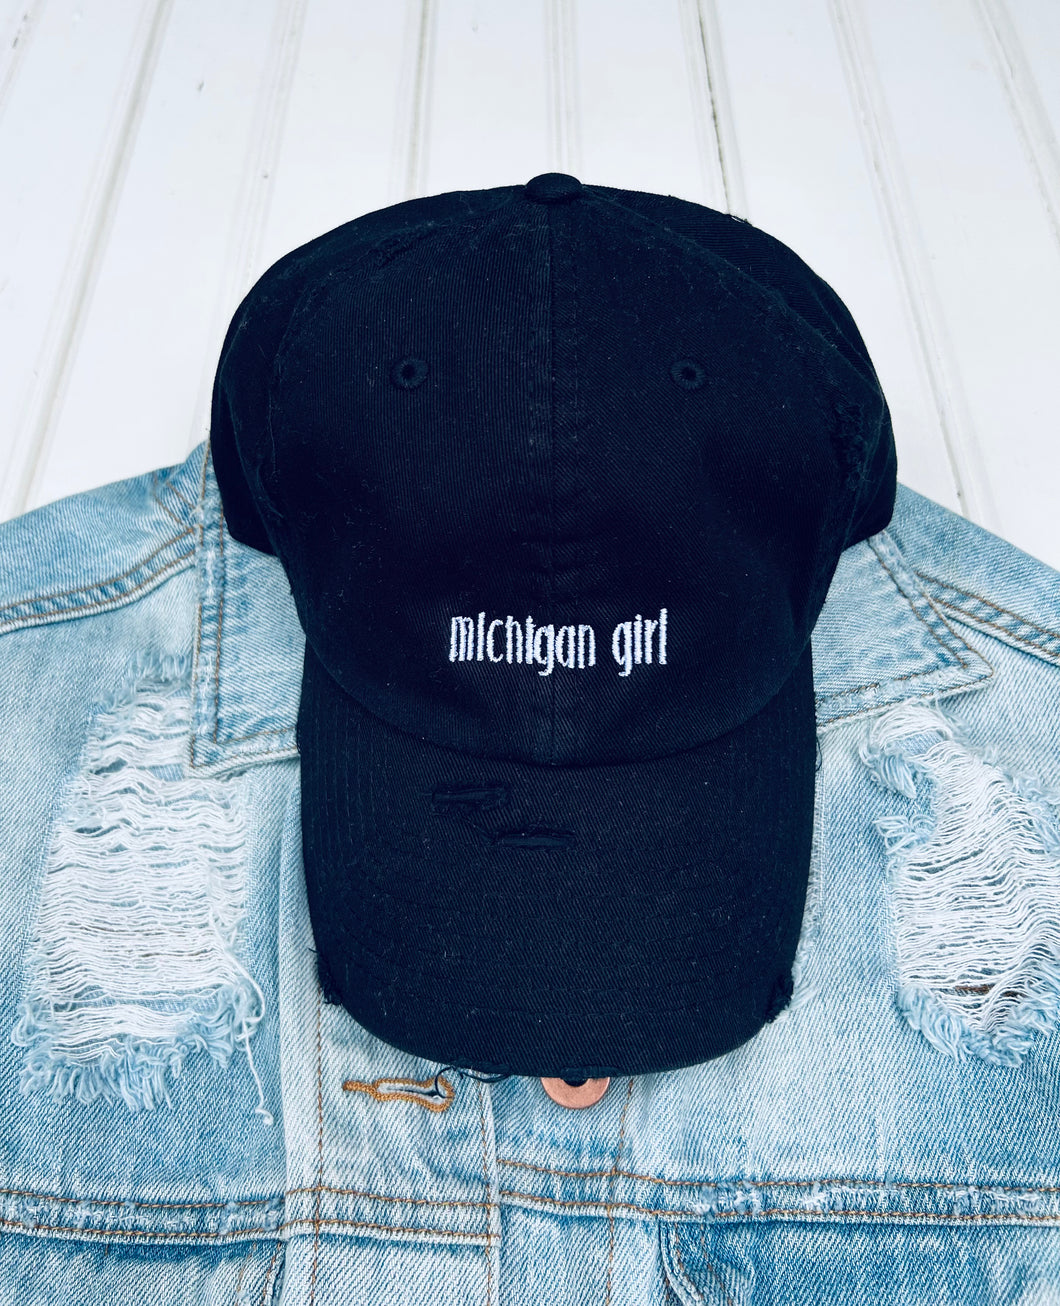 'Michigan Girl' Distressed Baseball Hat